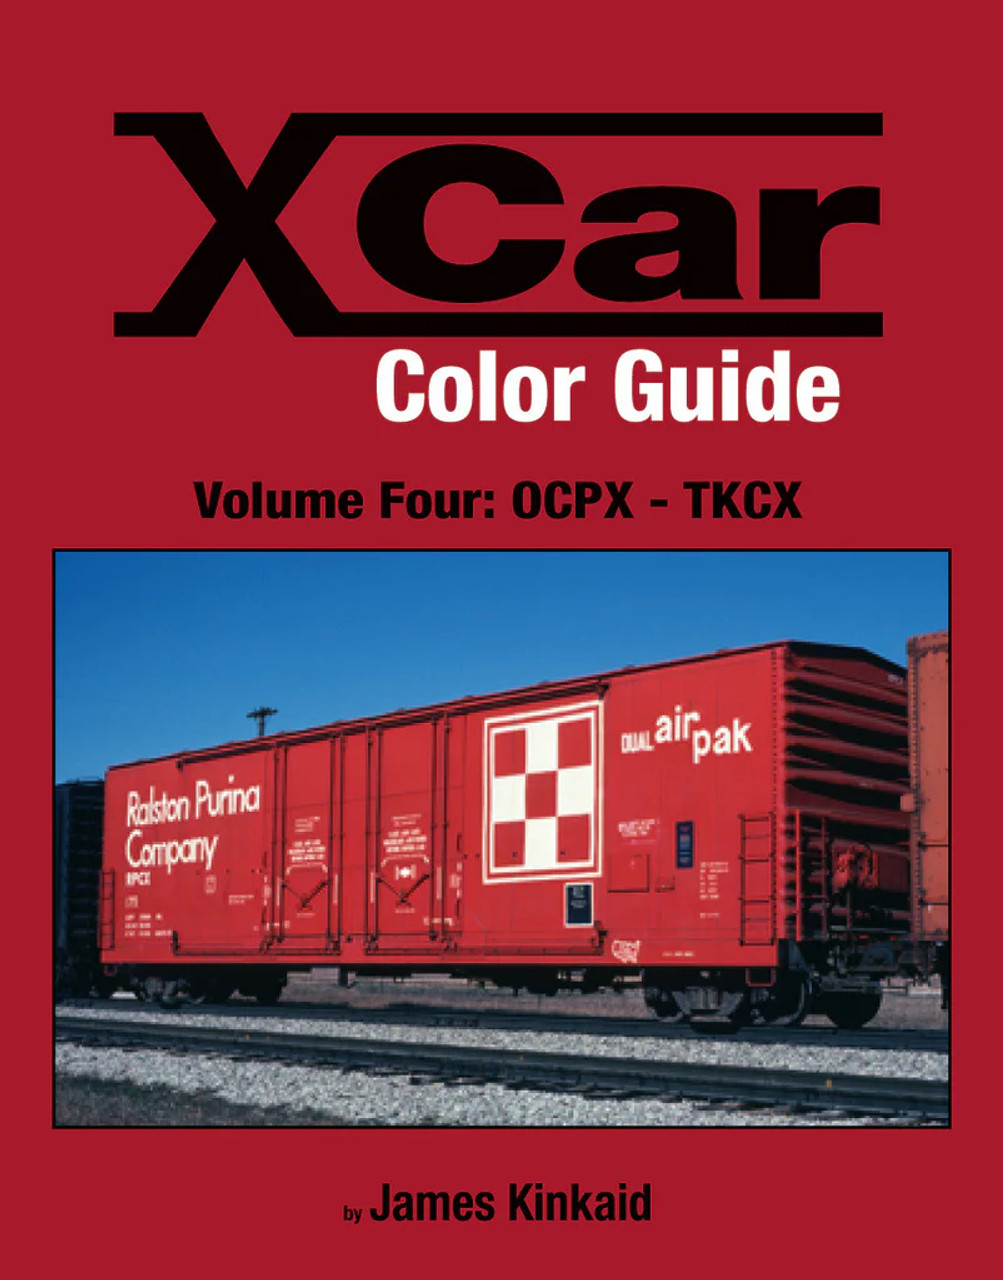 Morning Sun 1588 X Car Color Guide Volume 4: OCPX-TKCX